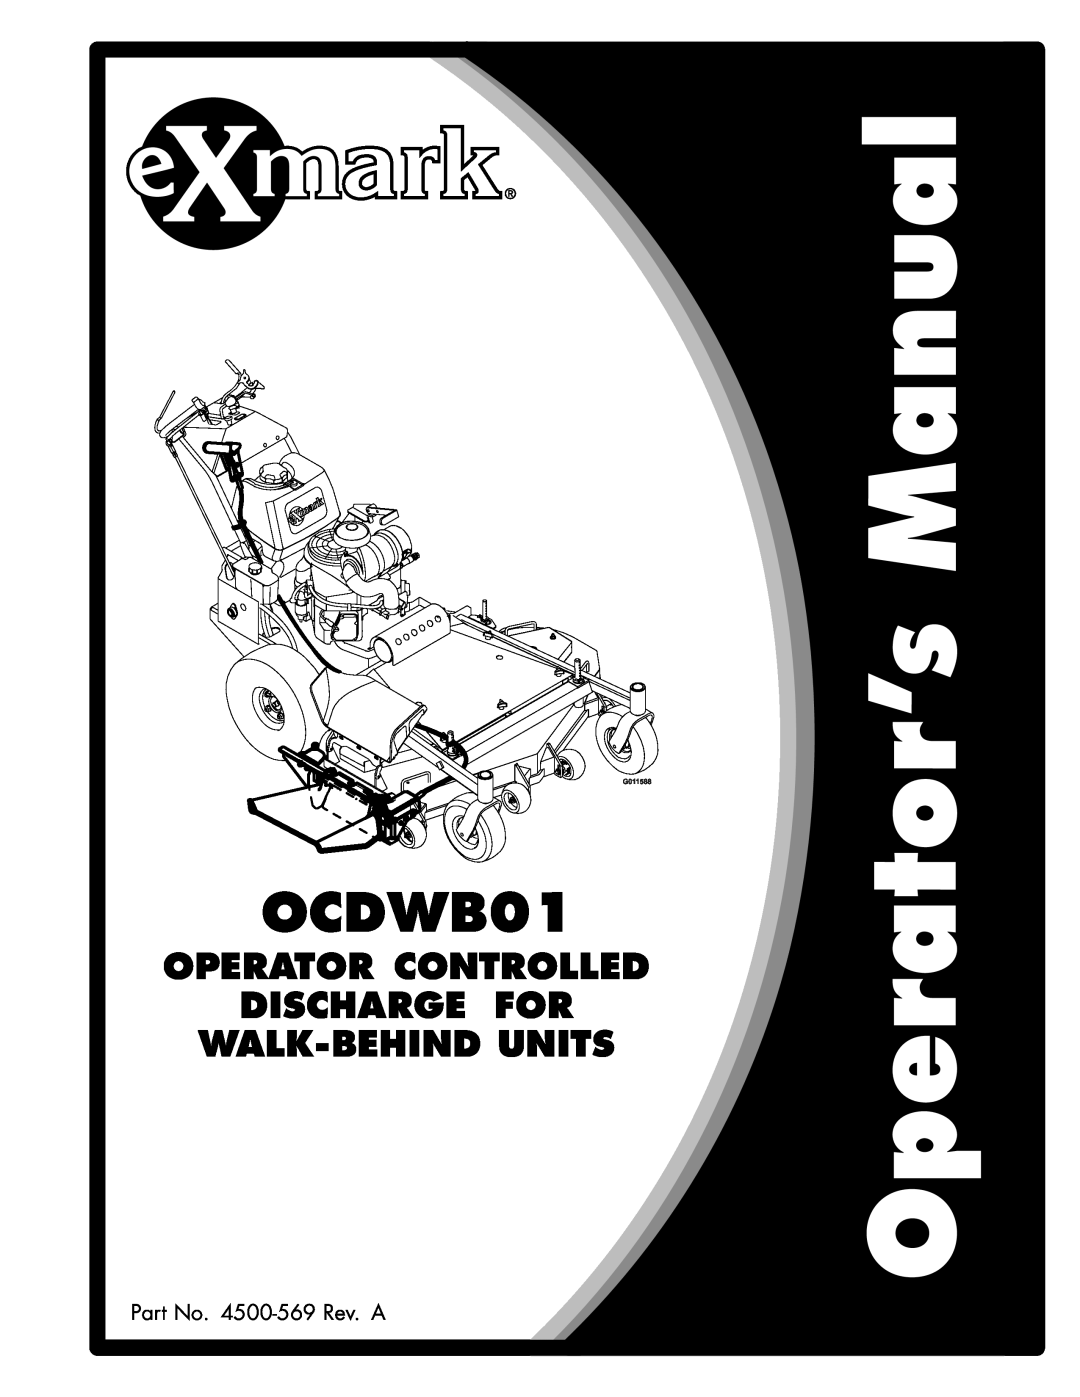 Exmark OCDWB01 manual Part No. 4500-570Rev. A 